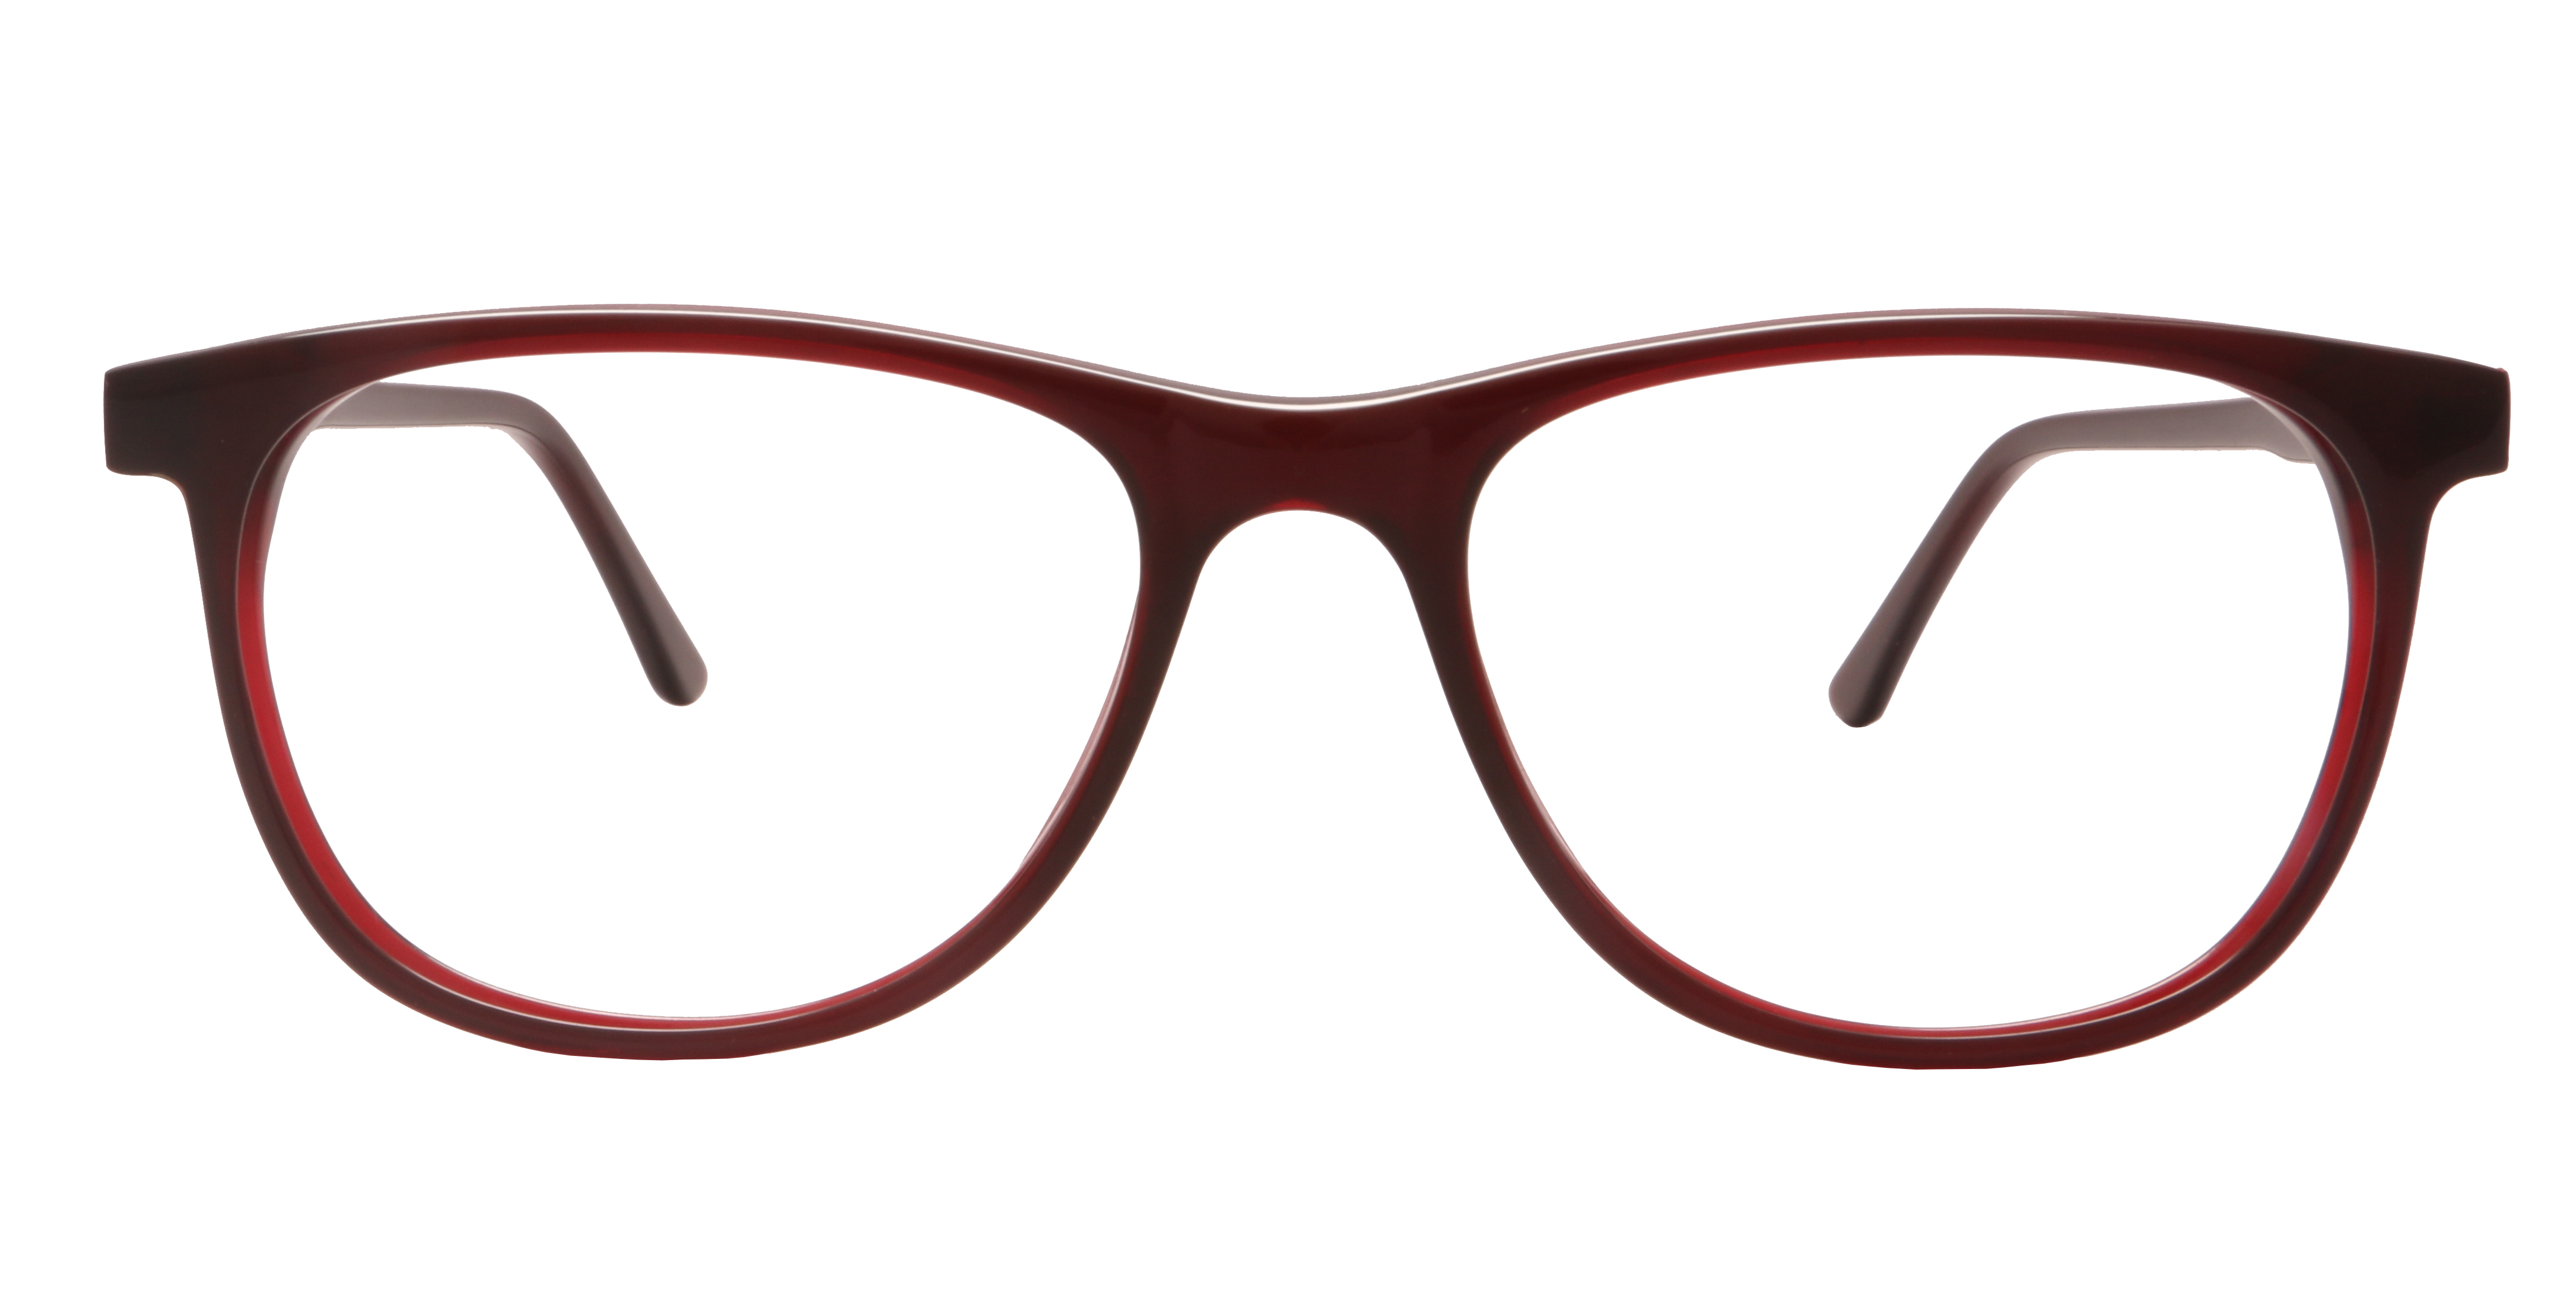 Buy Eyeglasses - Sunglasses - Spectacles Frames - Contact Lenses